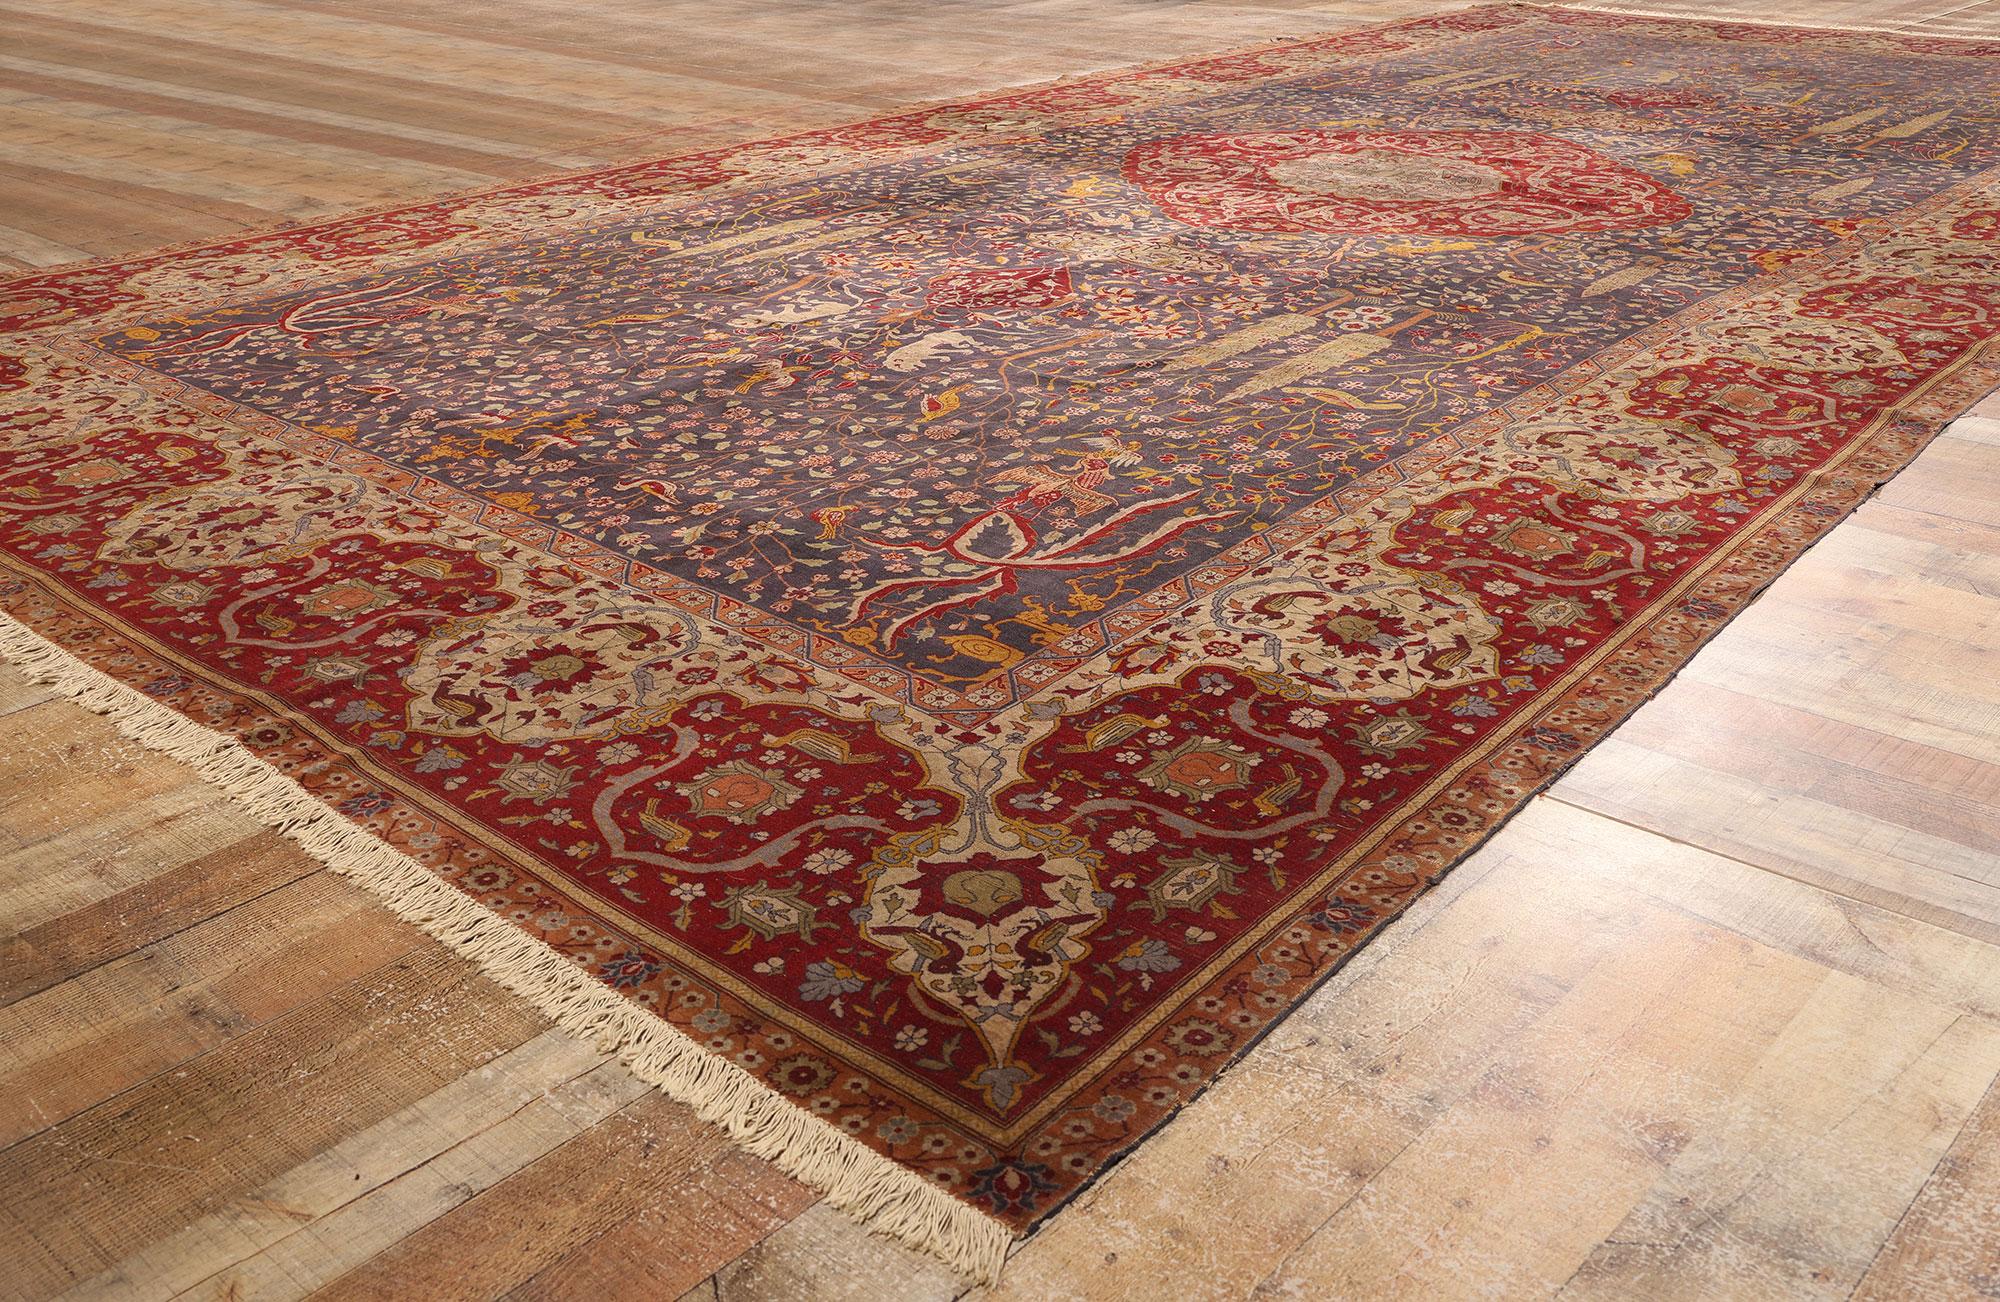 Wool Antique Persian Isfahan Rug, Schwarzenberg Paradise Park Safavid Carpet For Sale